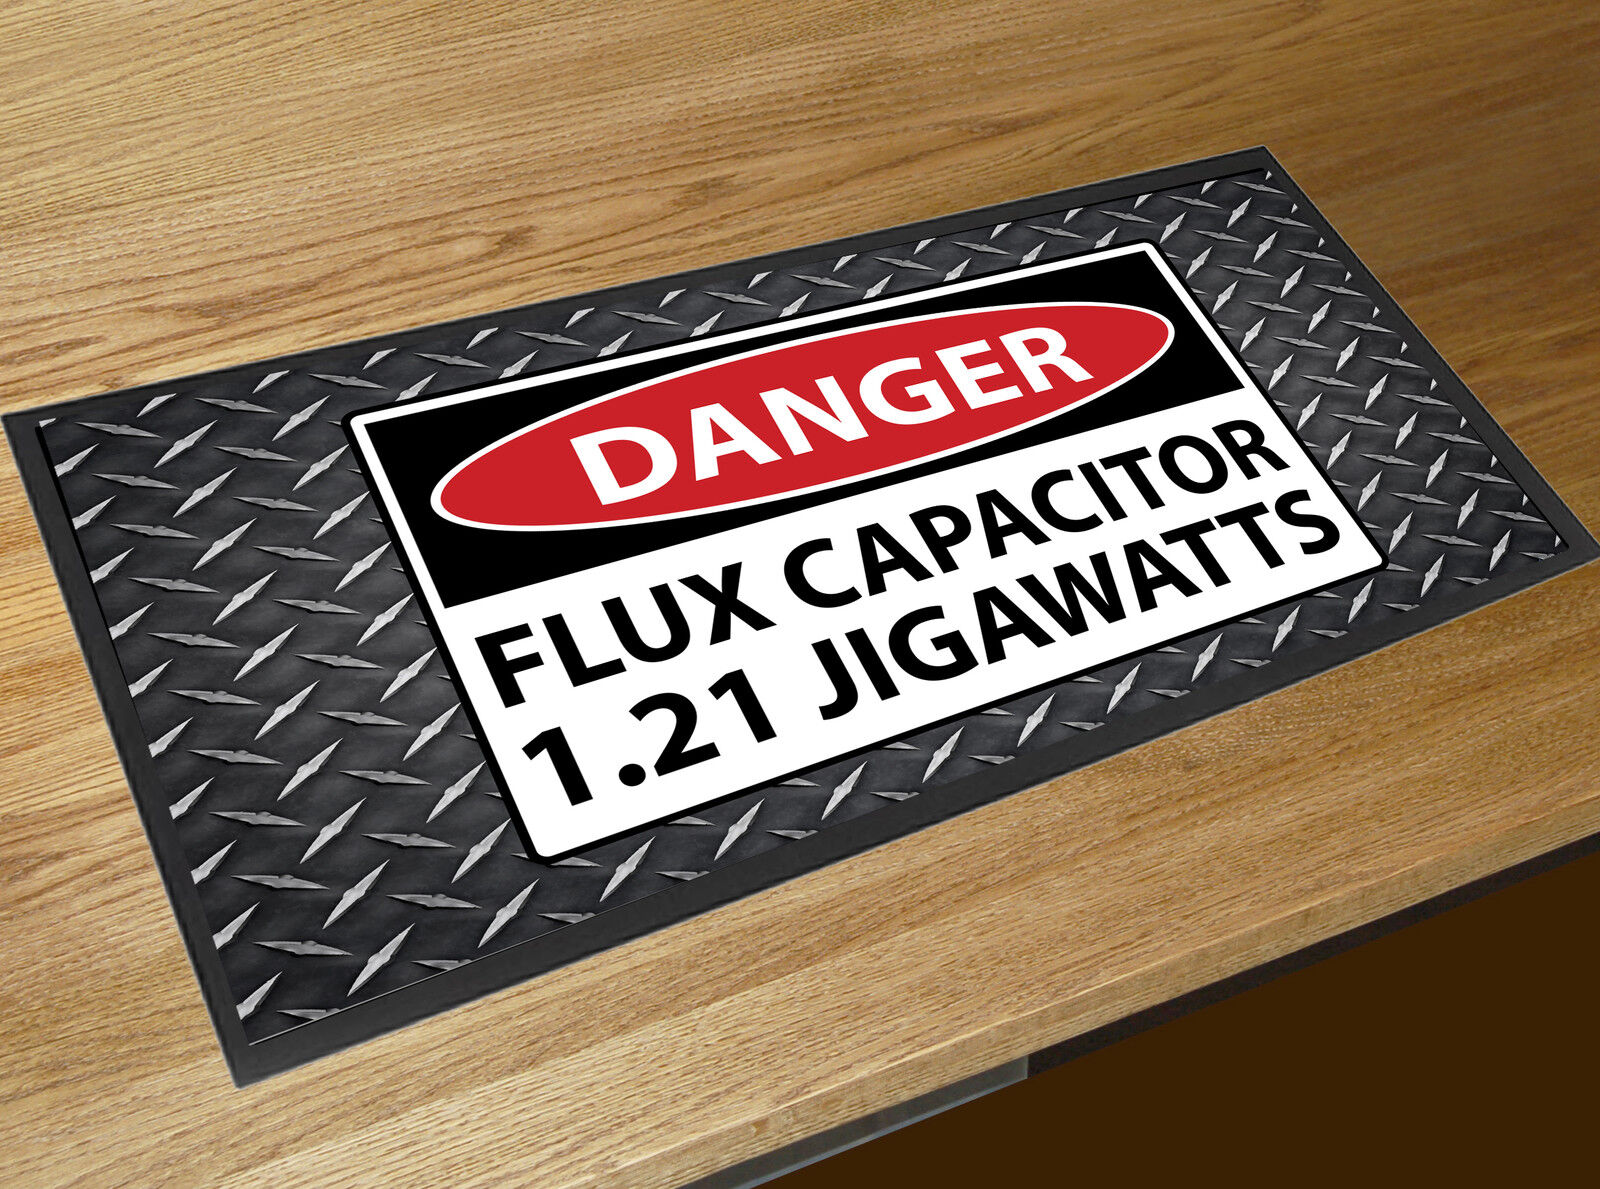 Back to the Future Danger Flux Capacitor 1.21 Jigawatts bar runner